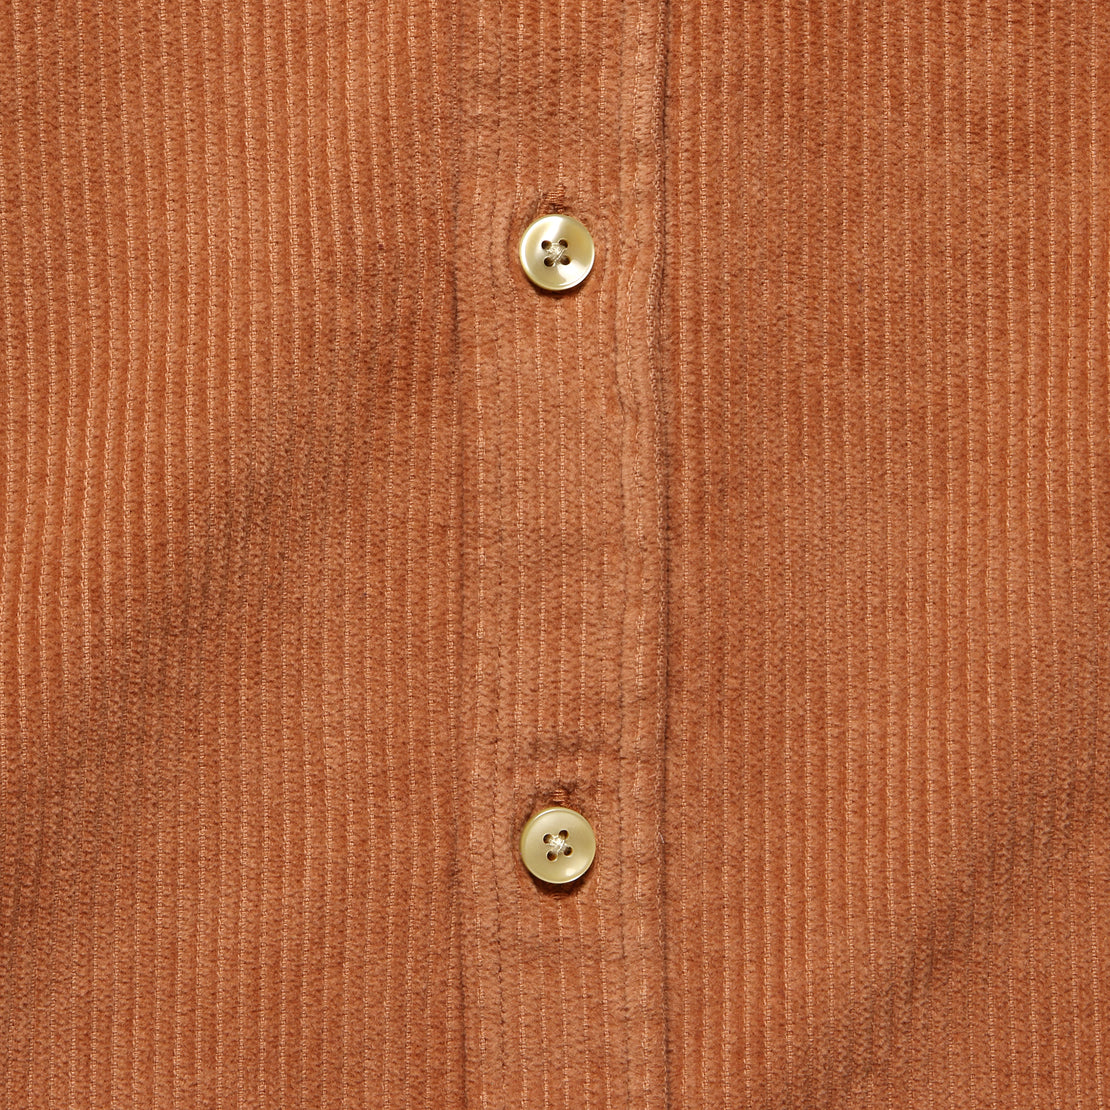 Corduroy Lobo Shirt - Brick - Portuguese Flannel - STAG Provisions - Tops - L/S Woven - Corduroy